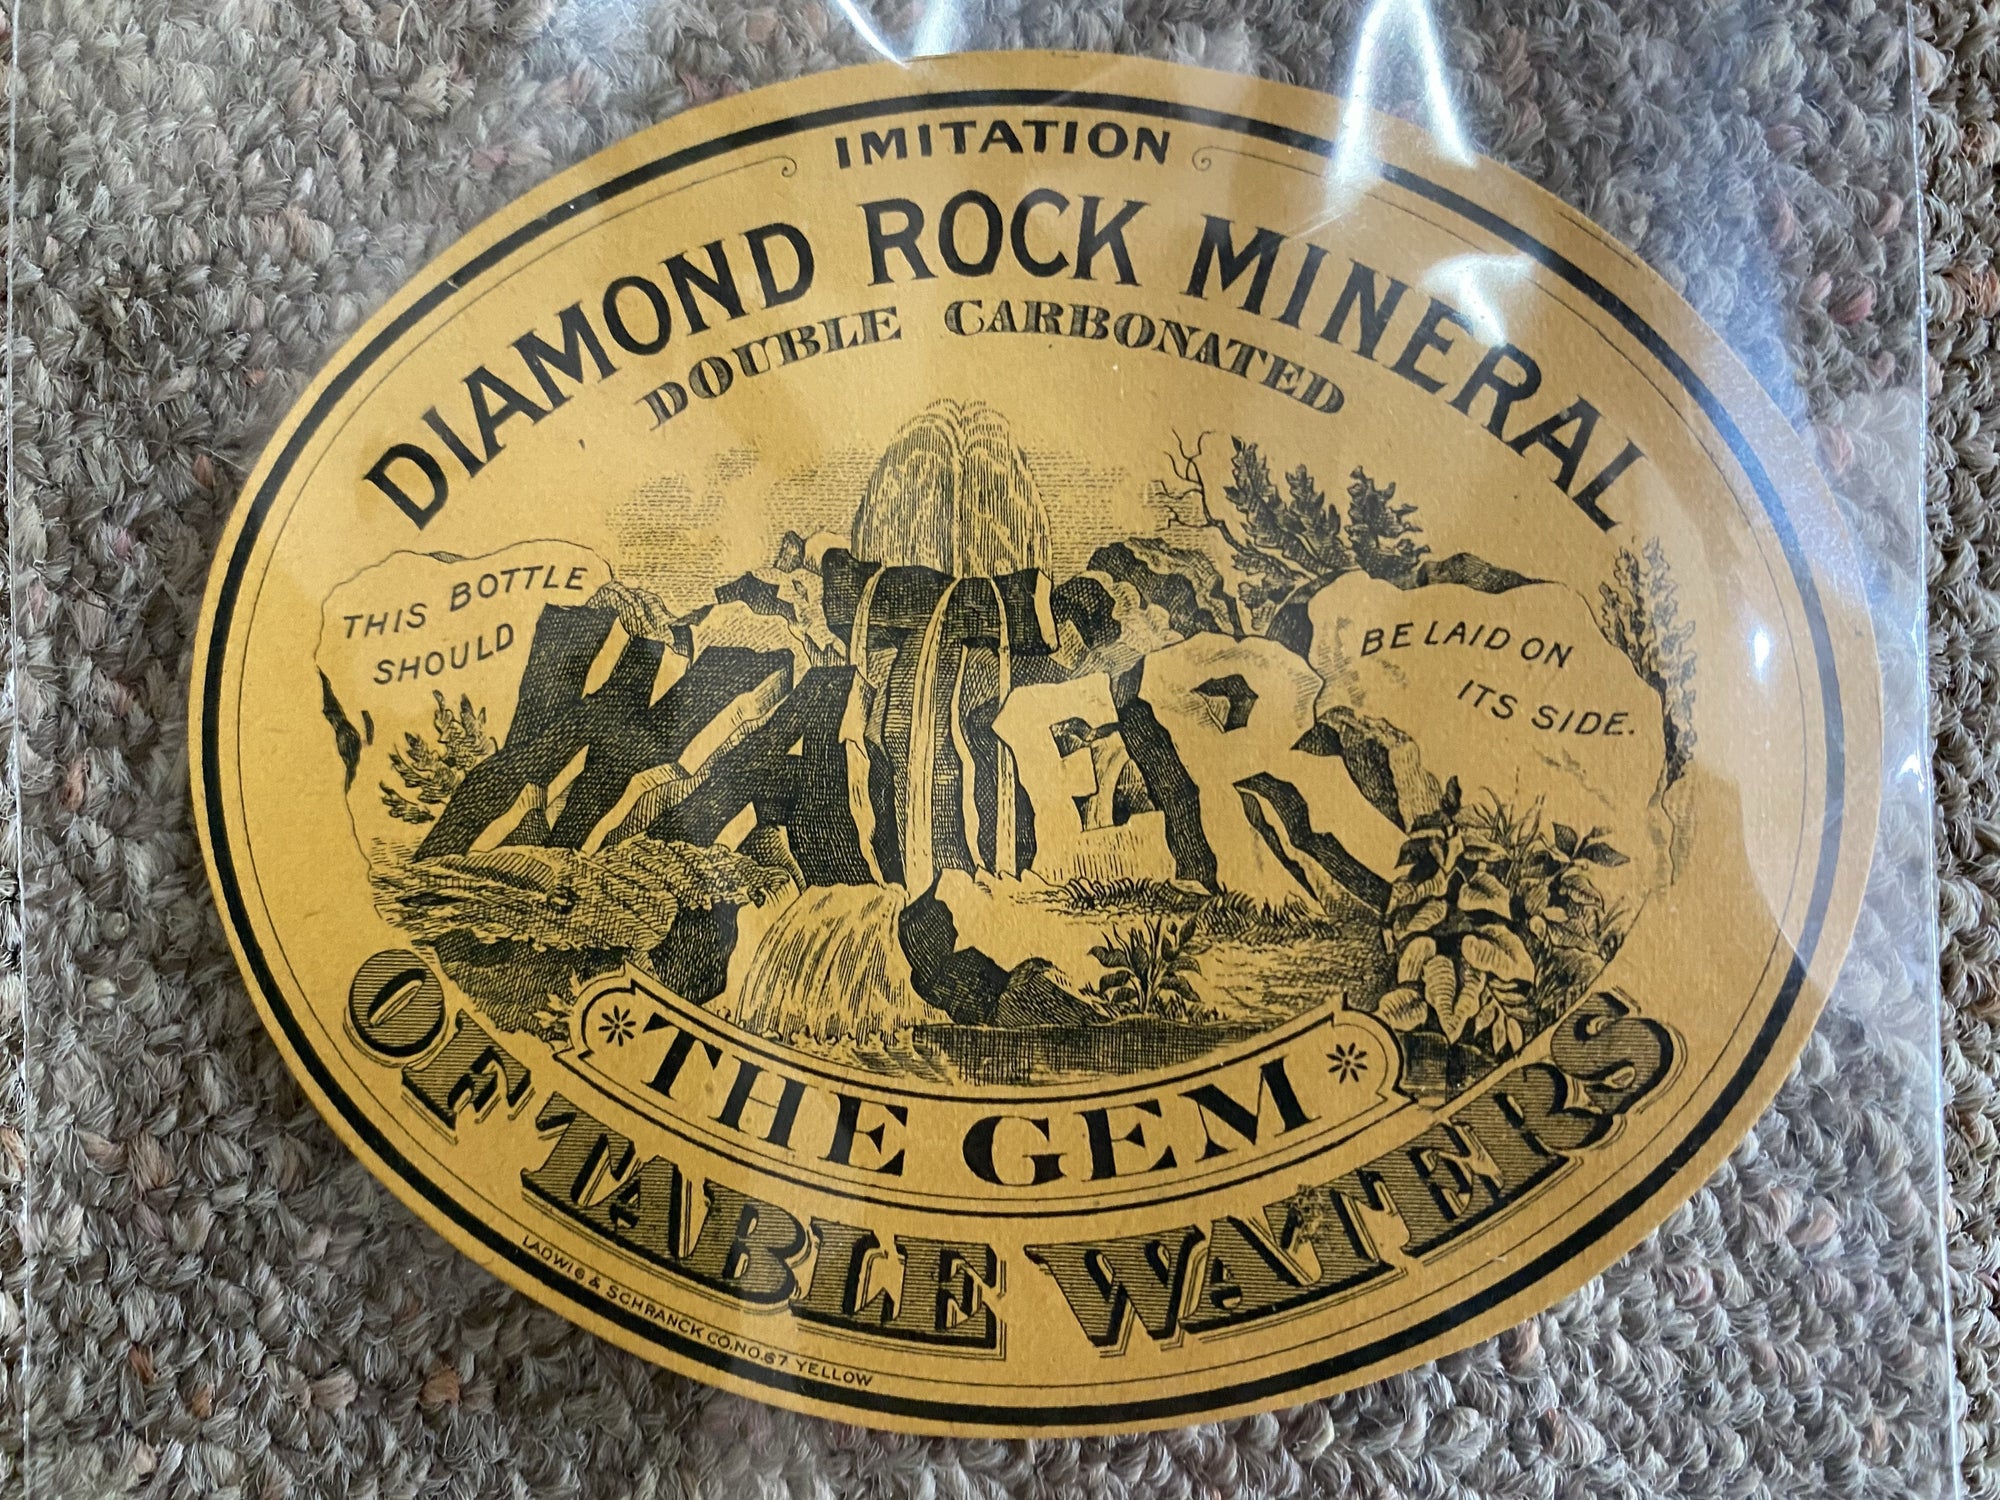 Civil War era bottle label for Diamond Rock mineral water, circa 1880. Mint condition.